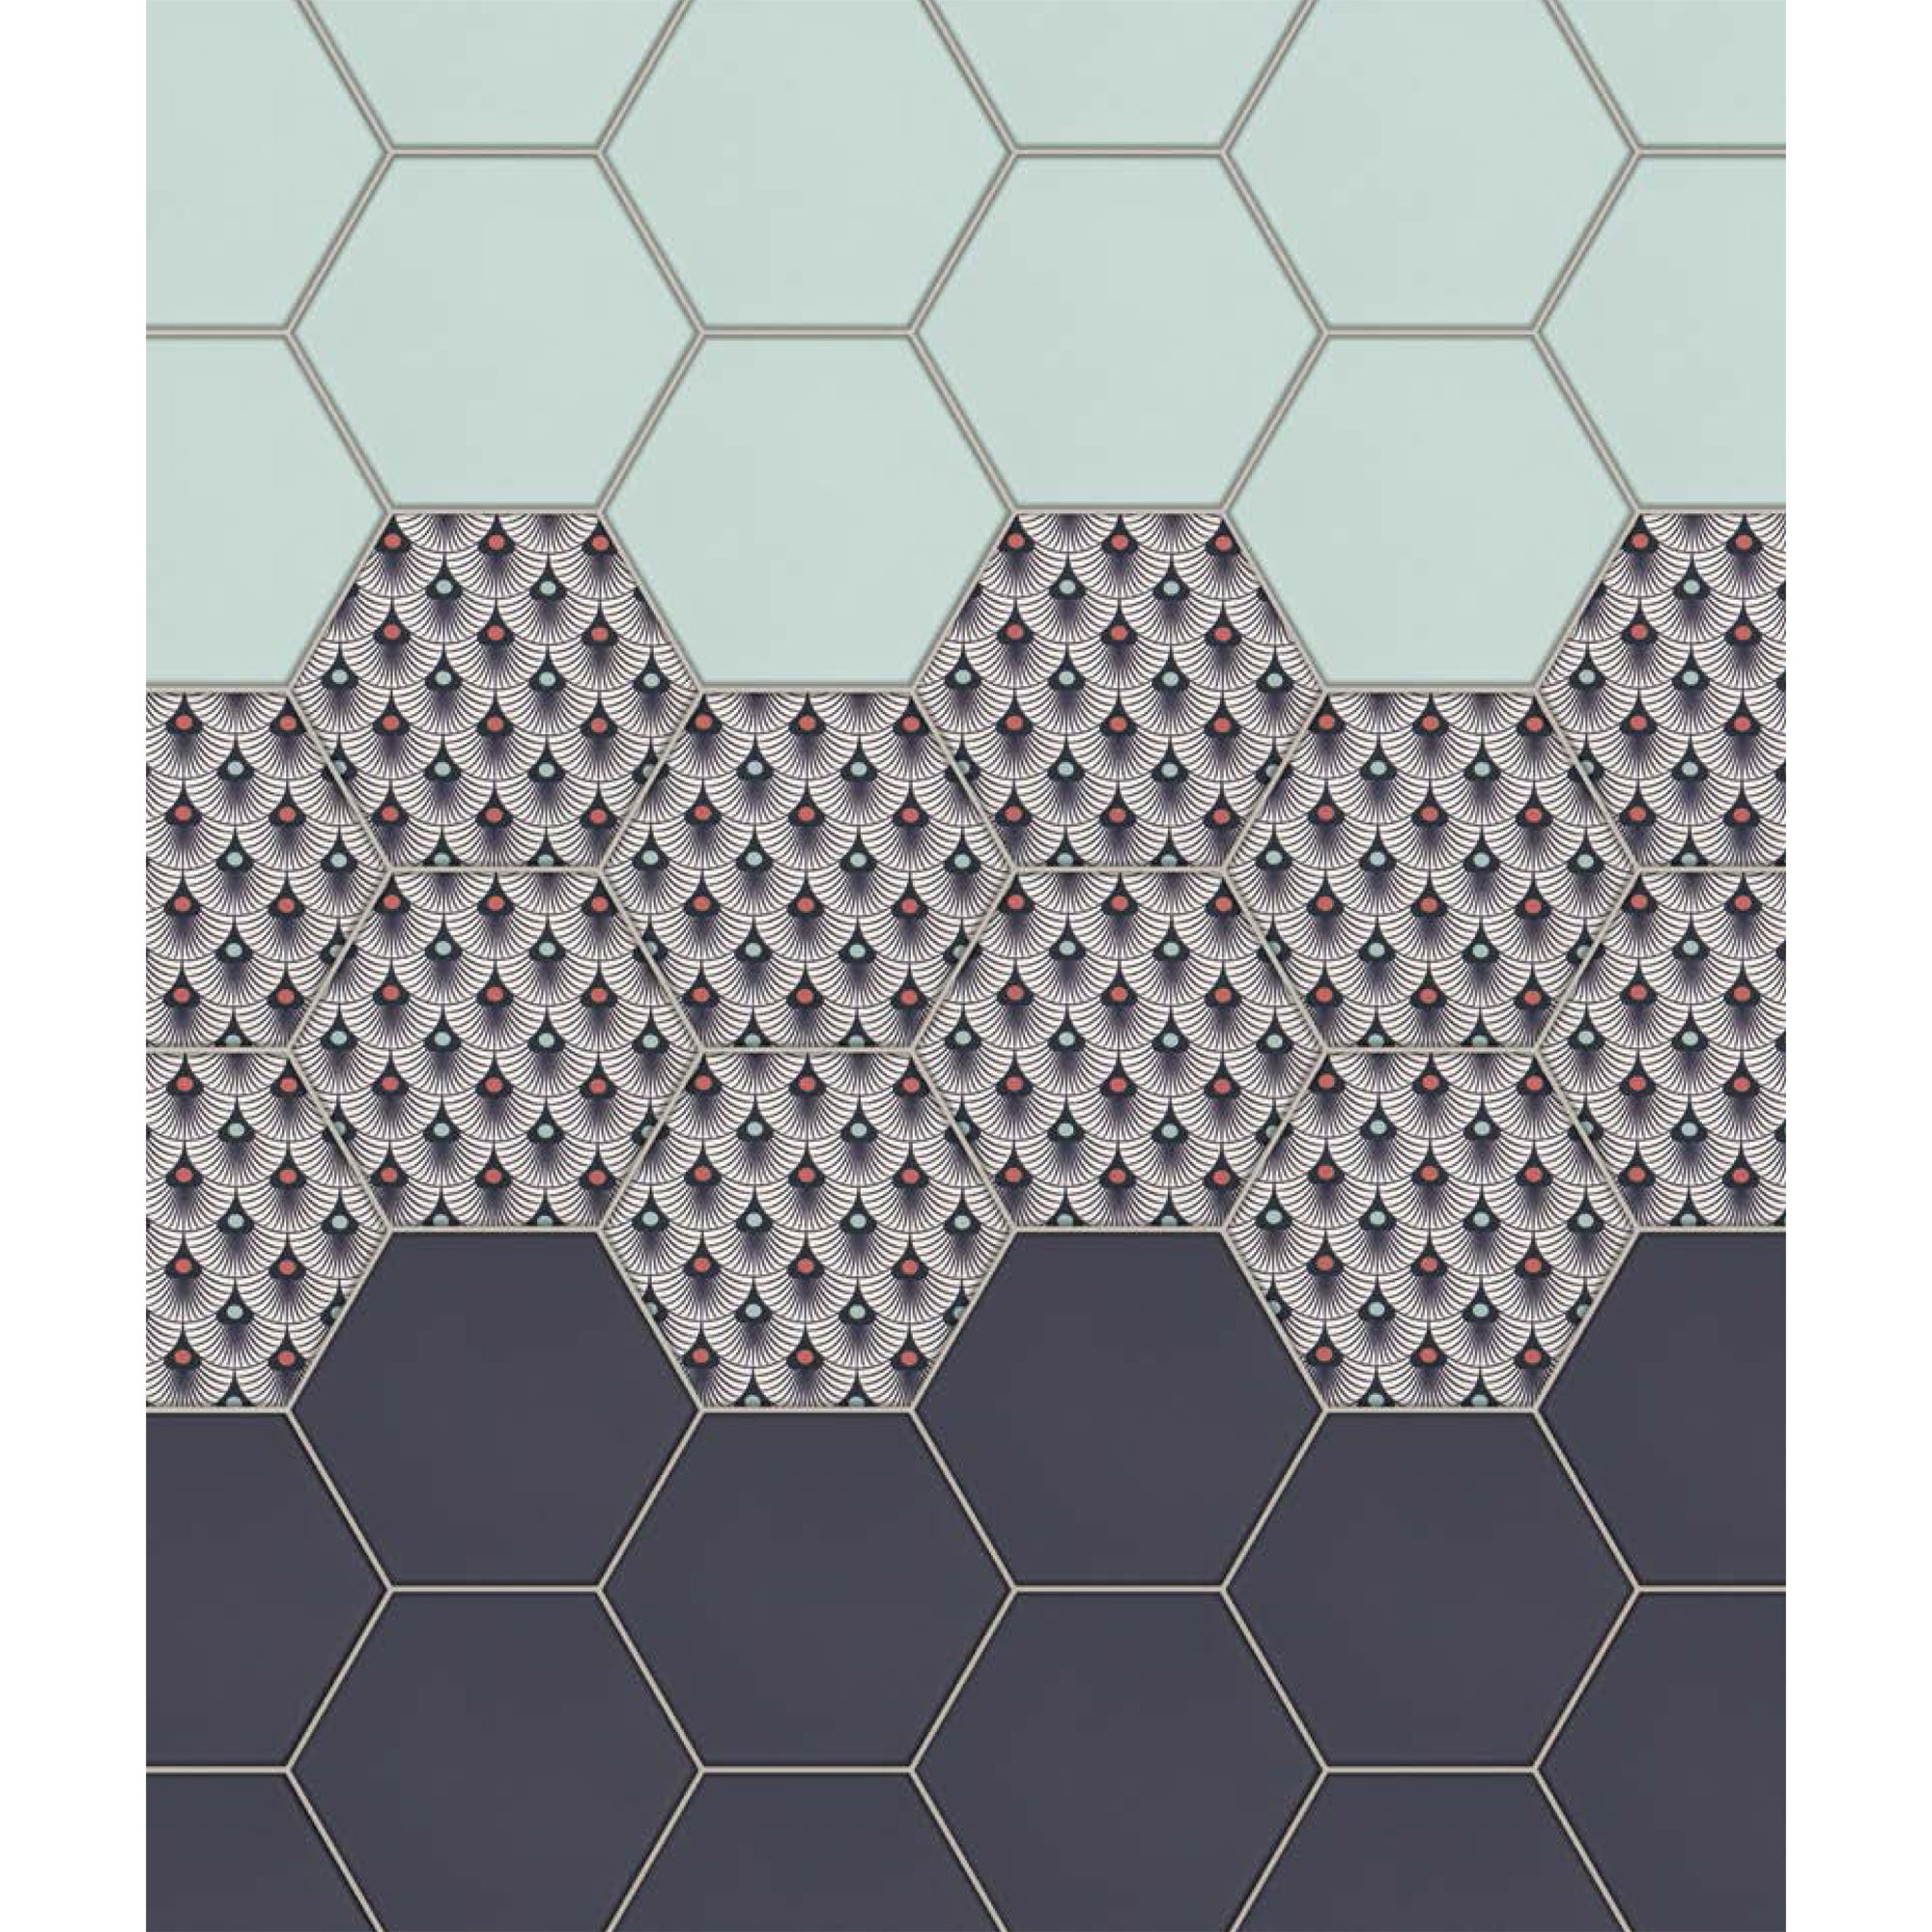 Topcu - Flamingo 6 in. Porcelain Hexagon Tile - Marlin